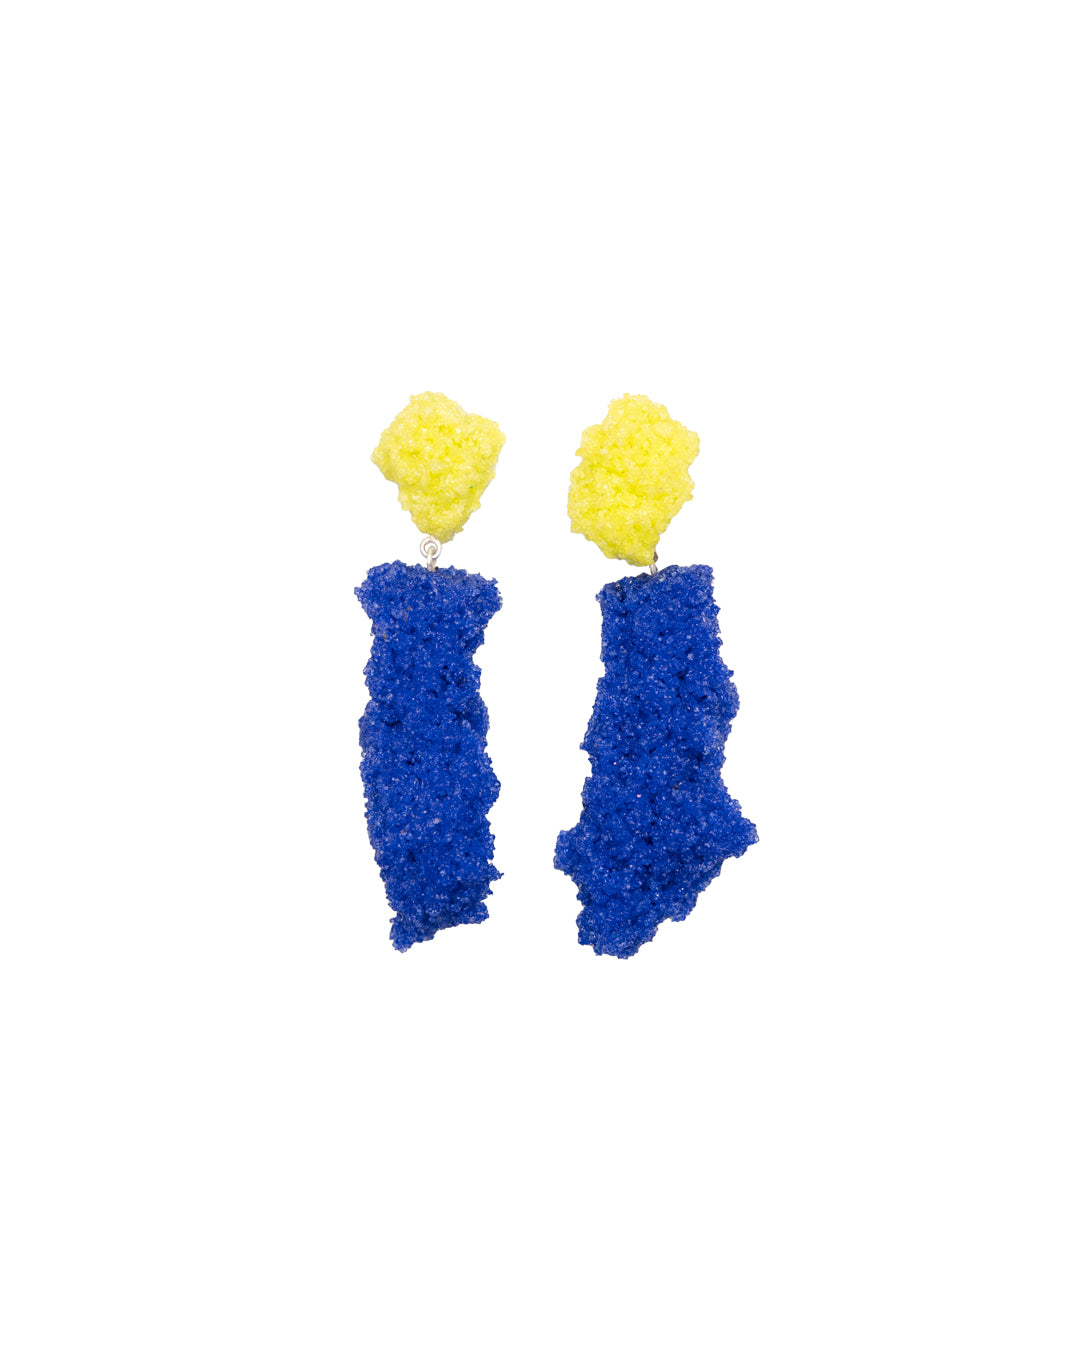 Handmade sugar earrings - Carla Movia